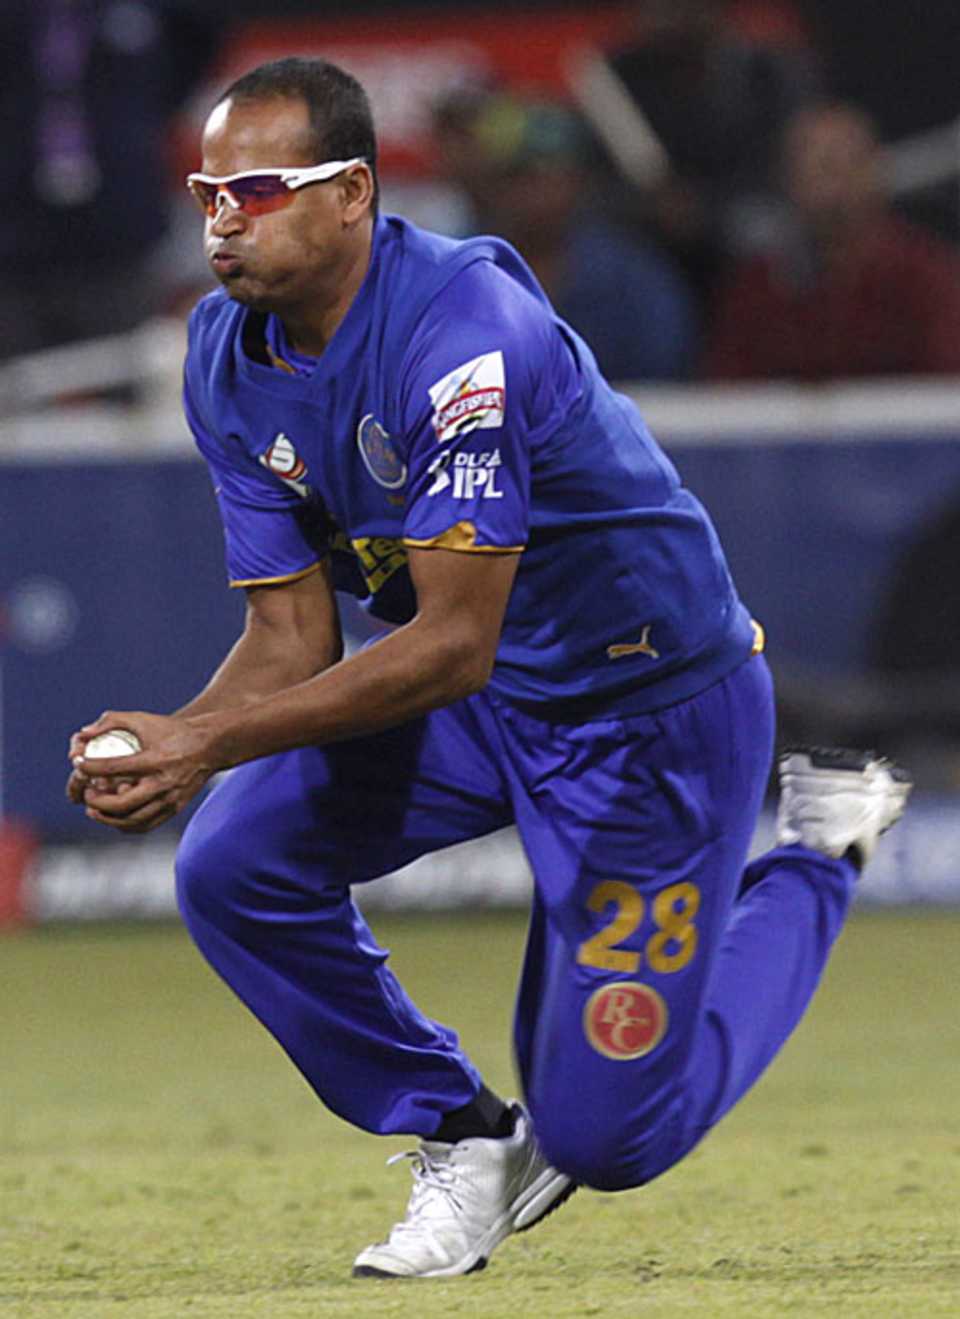 Yusuf Pathan takes the catch to get rid of Sanath Jayasuriya, Mumbai Indians v Rajasthan Royals, 45th match, IPL, Durban, May 14, 2009